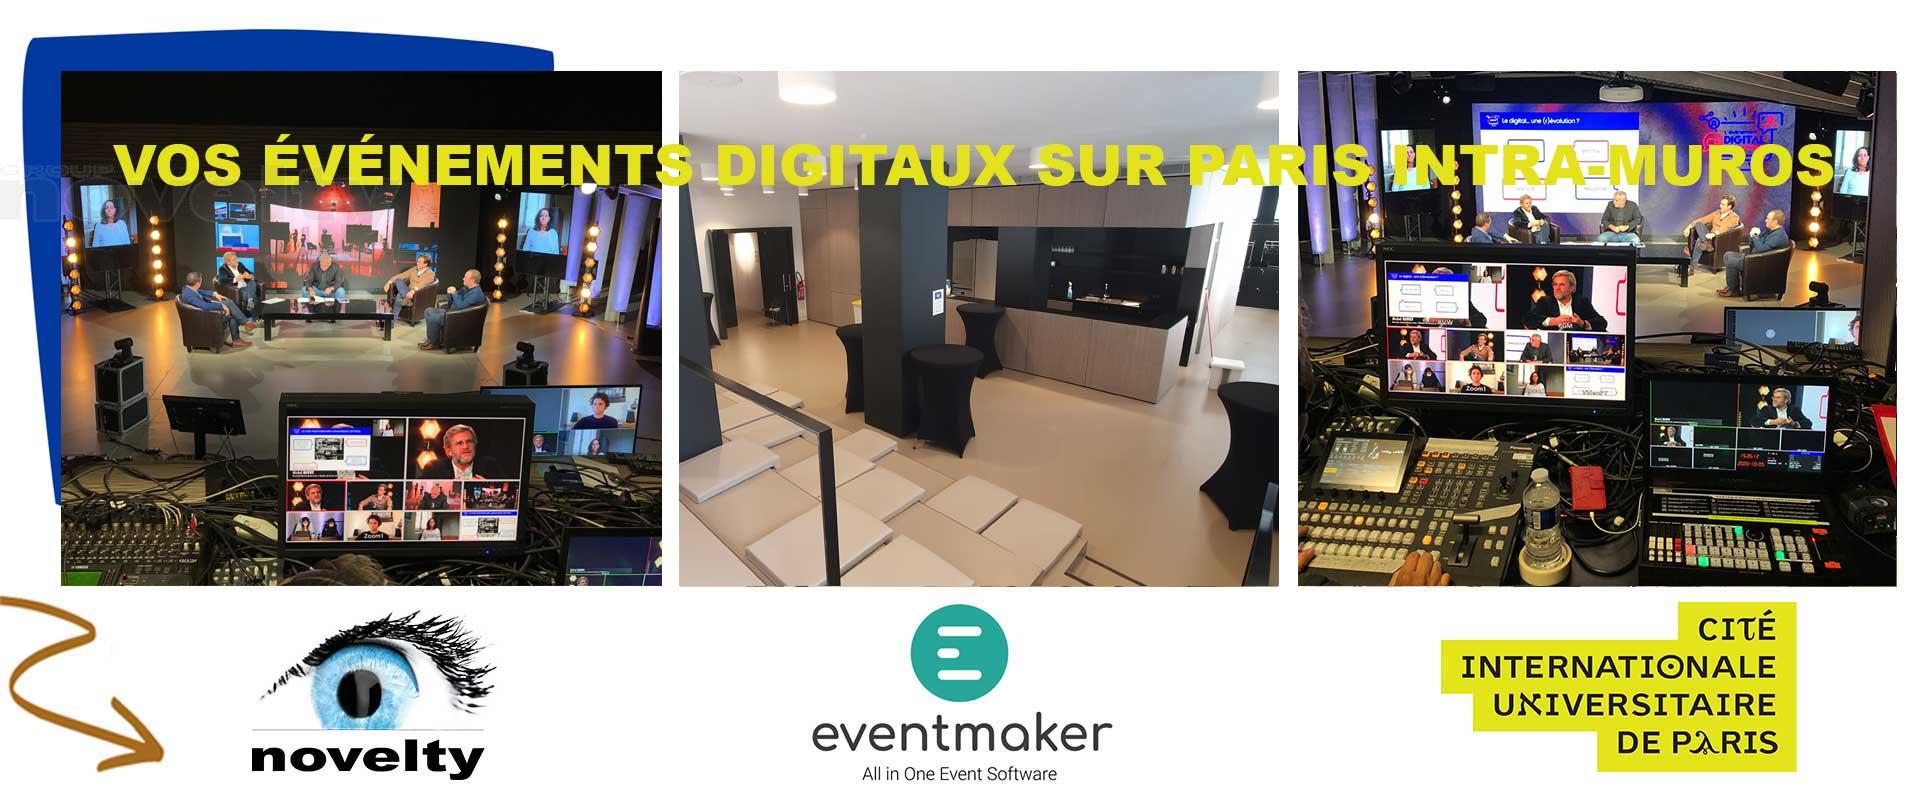 Visuel Your Digital Events in PARIS Intramural